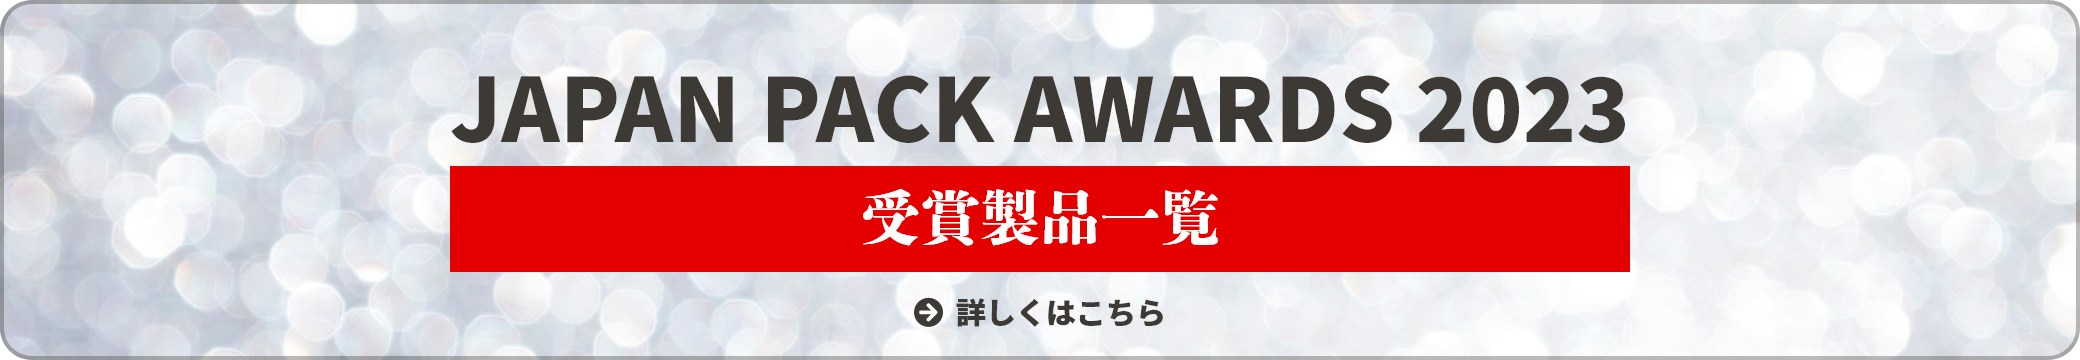 JAPAN PACK AWARDS 2023